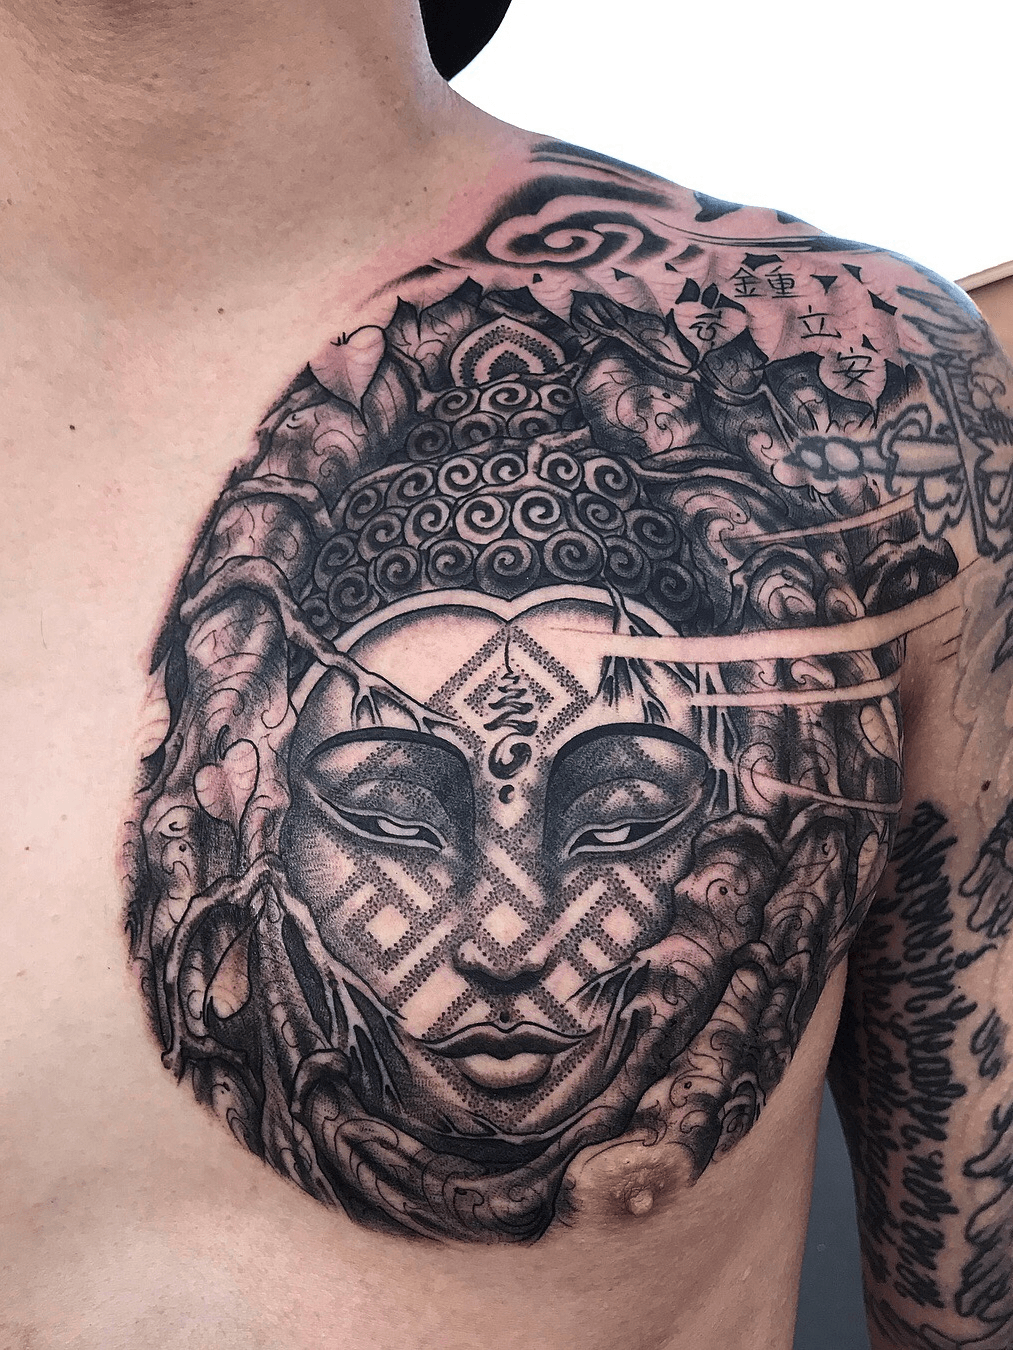 Nice start on this Buddha chest  Atomic Tattoos Bicester  Facebook